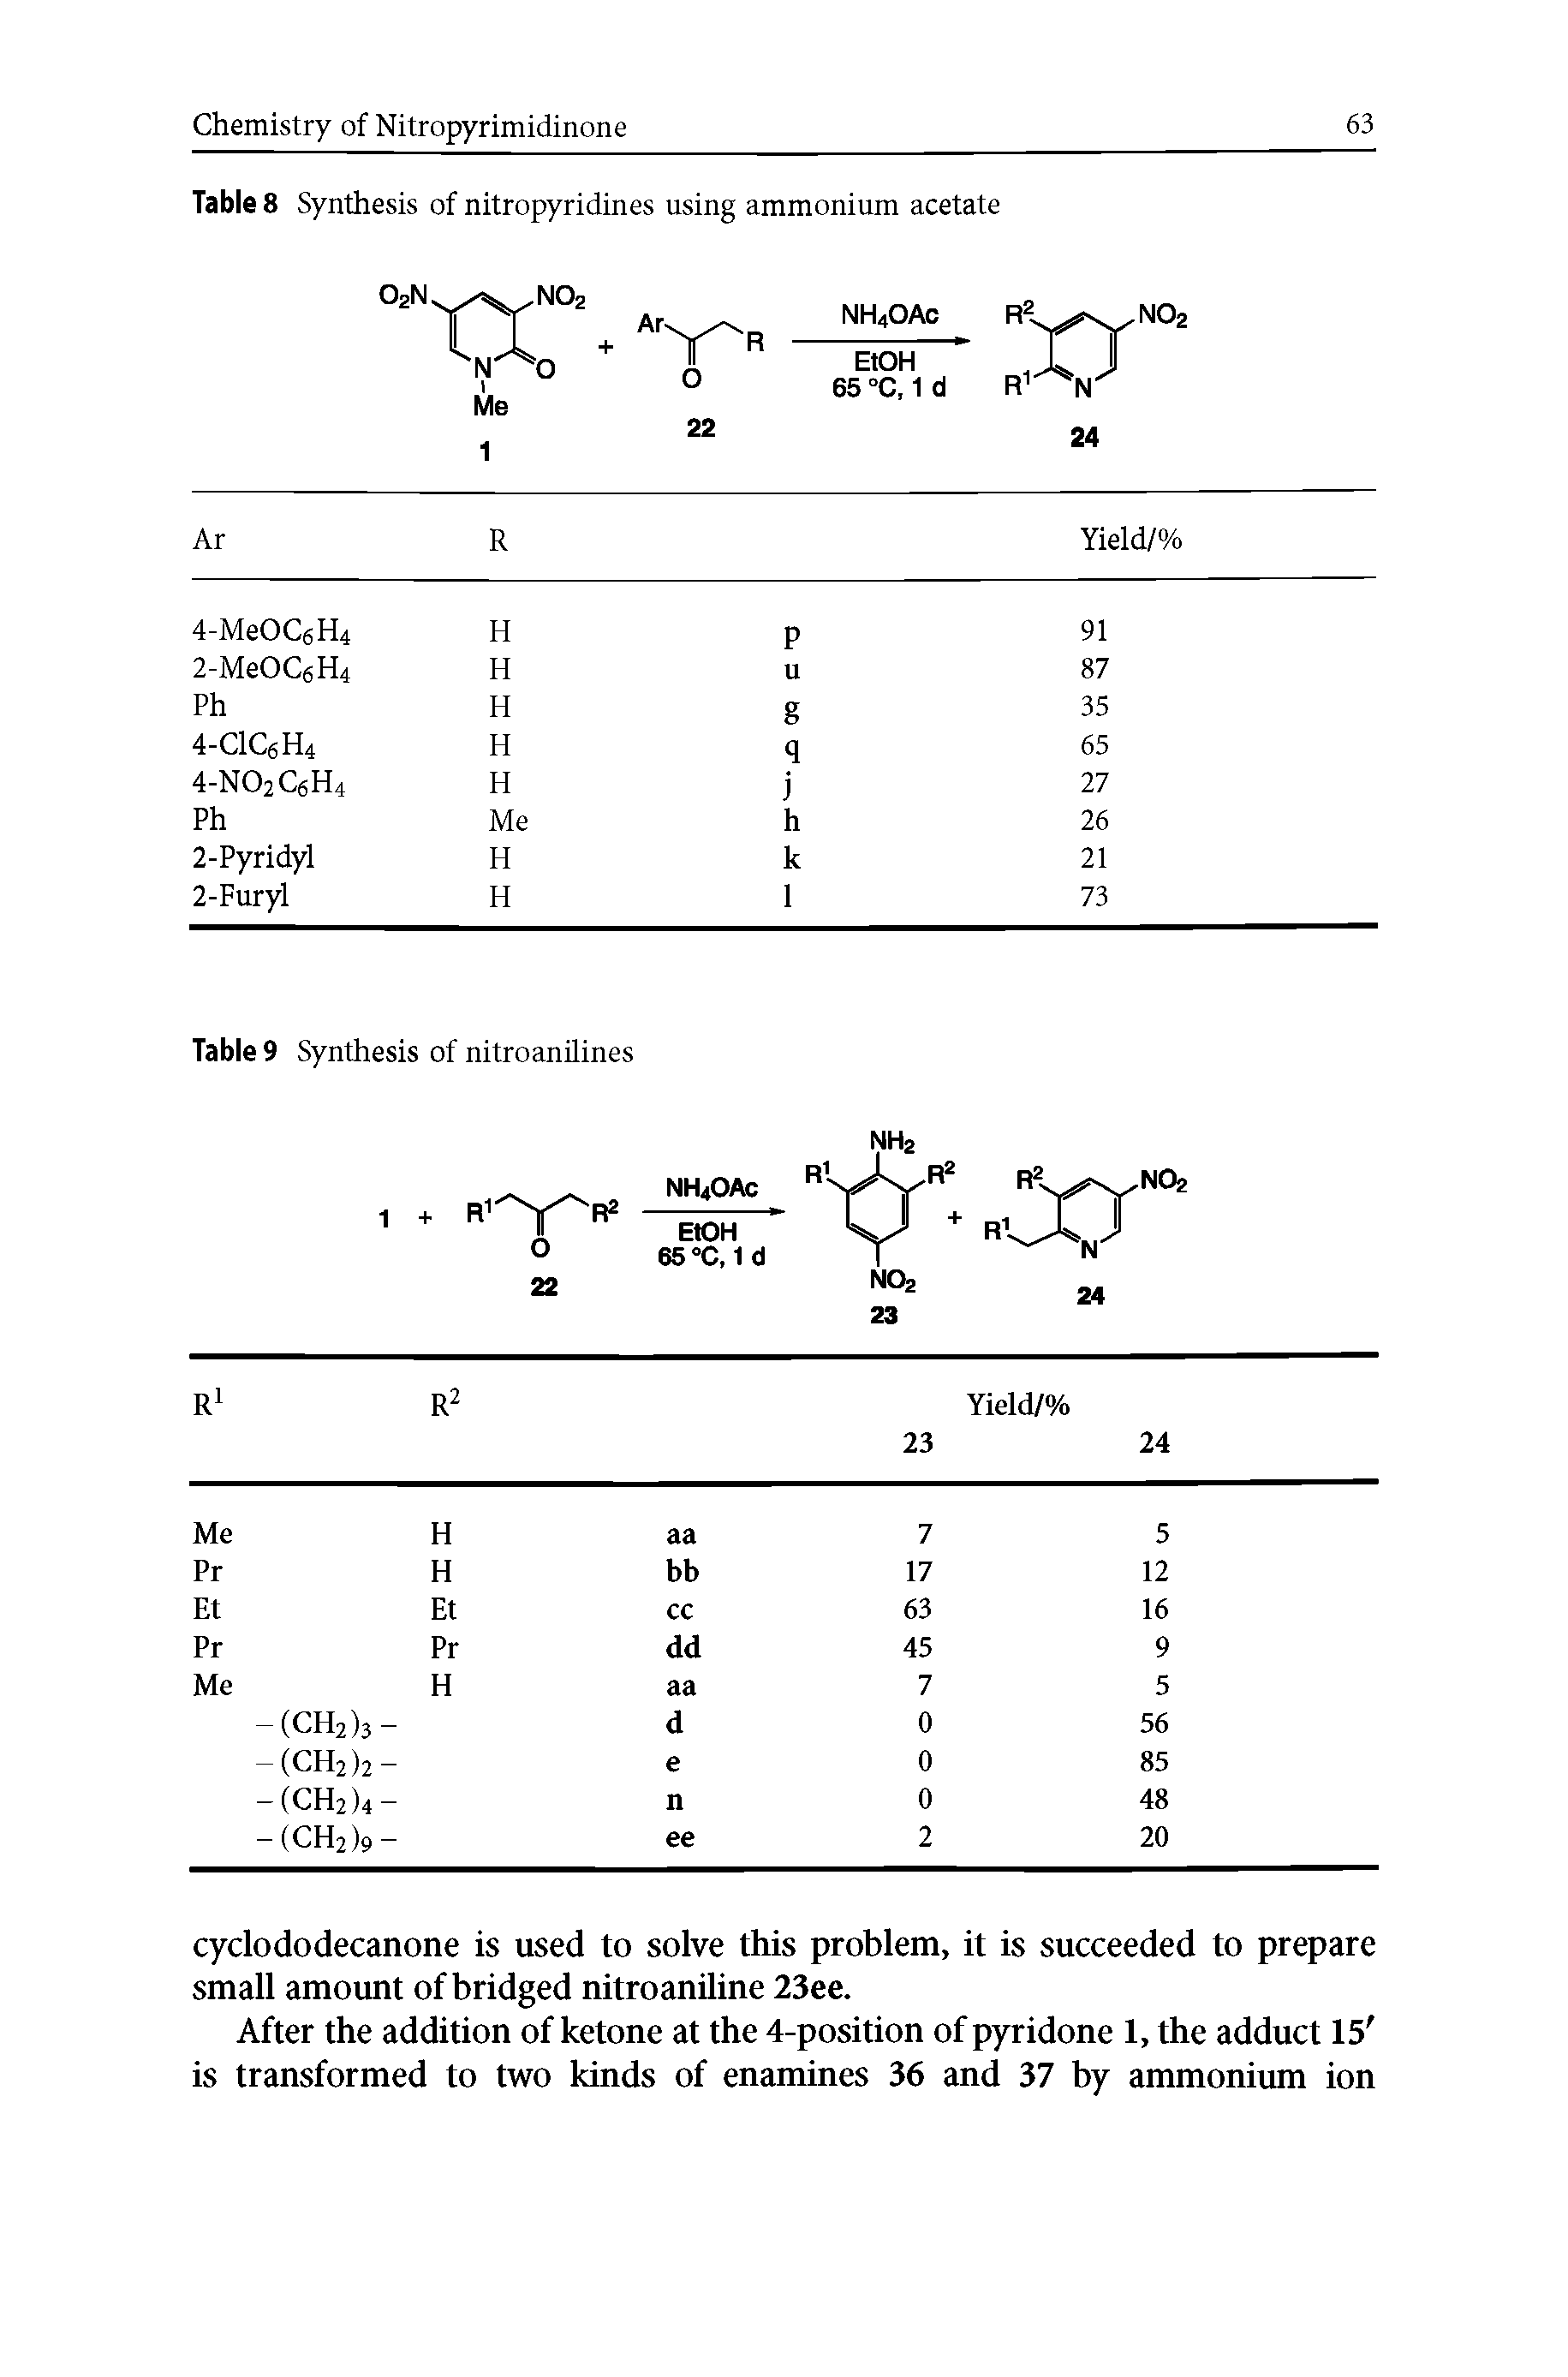 Table 8 Synthesis of nitropyridines using ammonium acetate ...